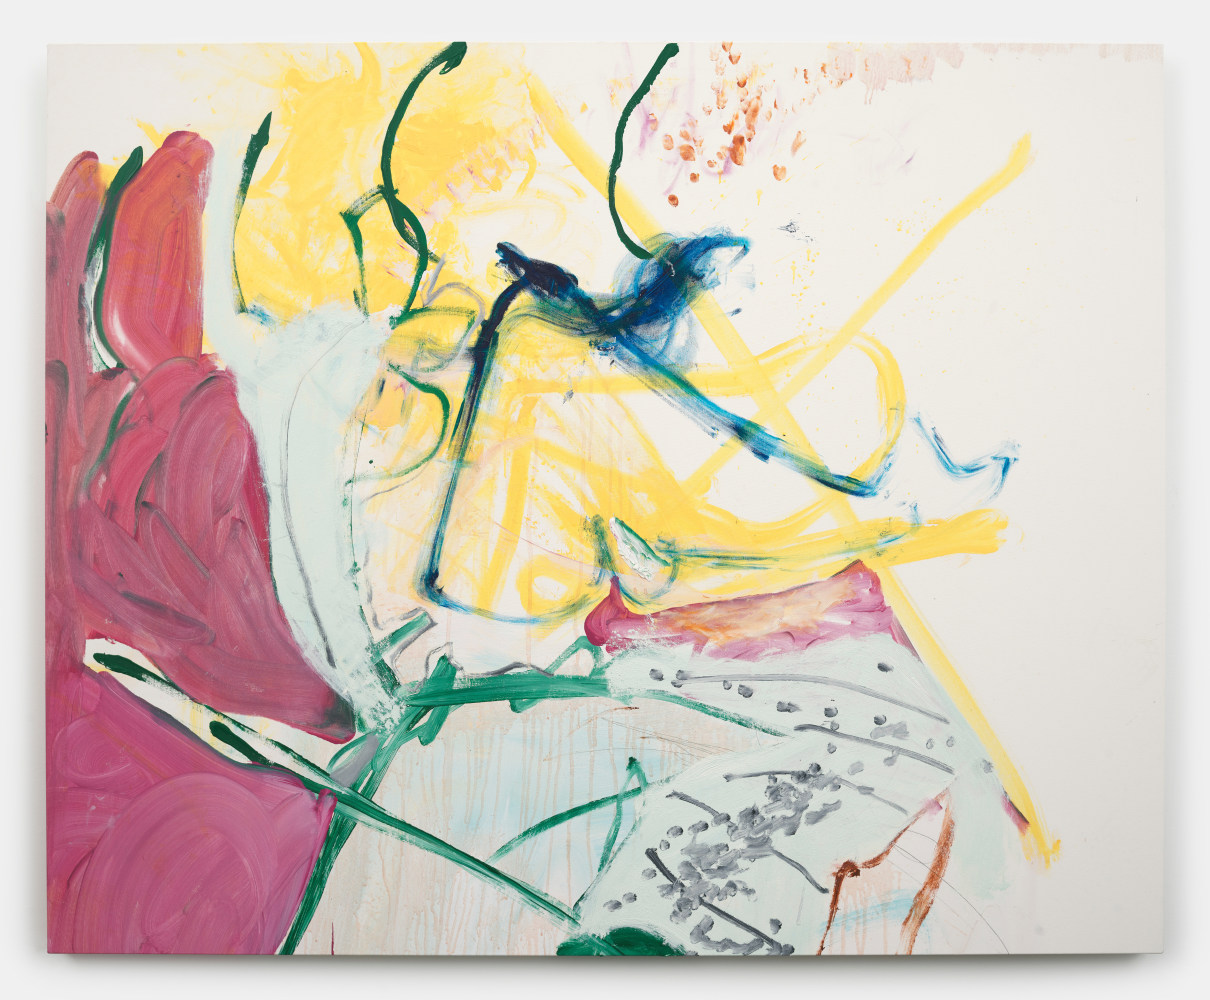 Andrey Samarin
Dolphin Joe, 2023
Oil stick, acrylic, oil, graphite on canvas
44h x 54w x 1.50d in
111.76h x 137.16w x 3.81d cm